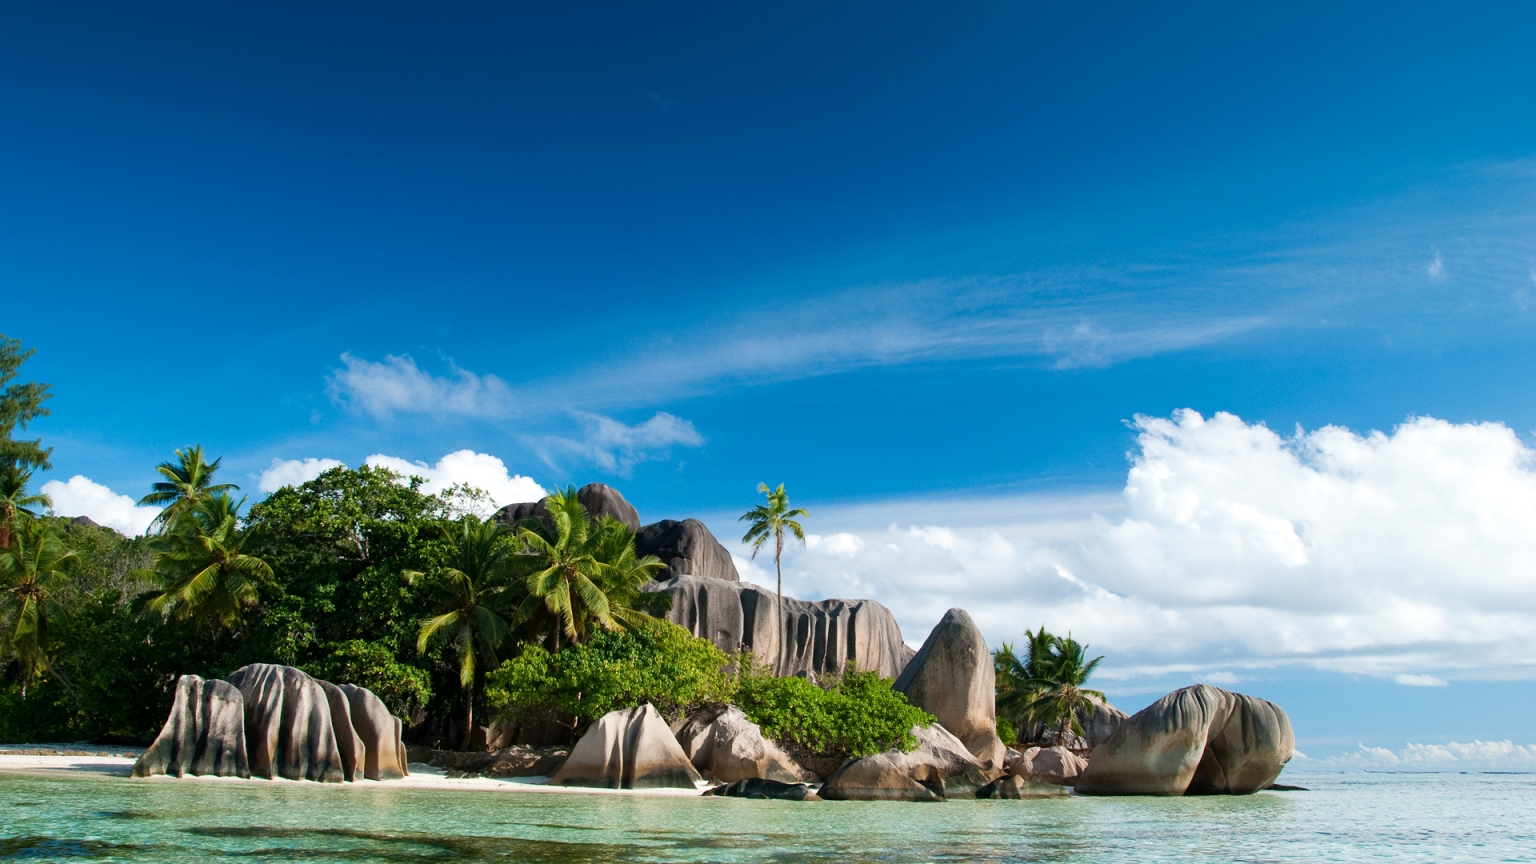 Seychelles Islands Landscape for 1536 x 864 HDTV resolution